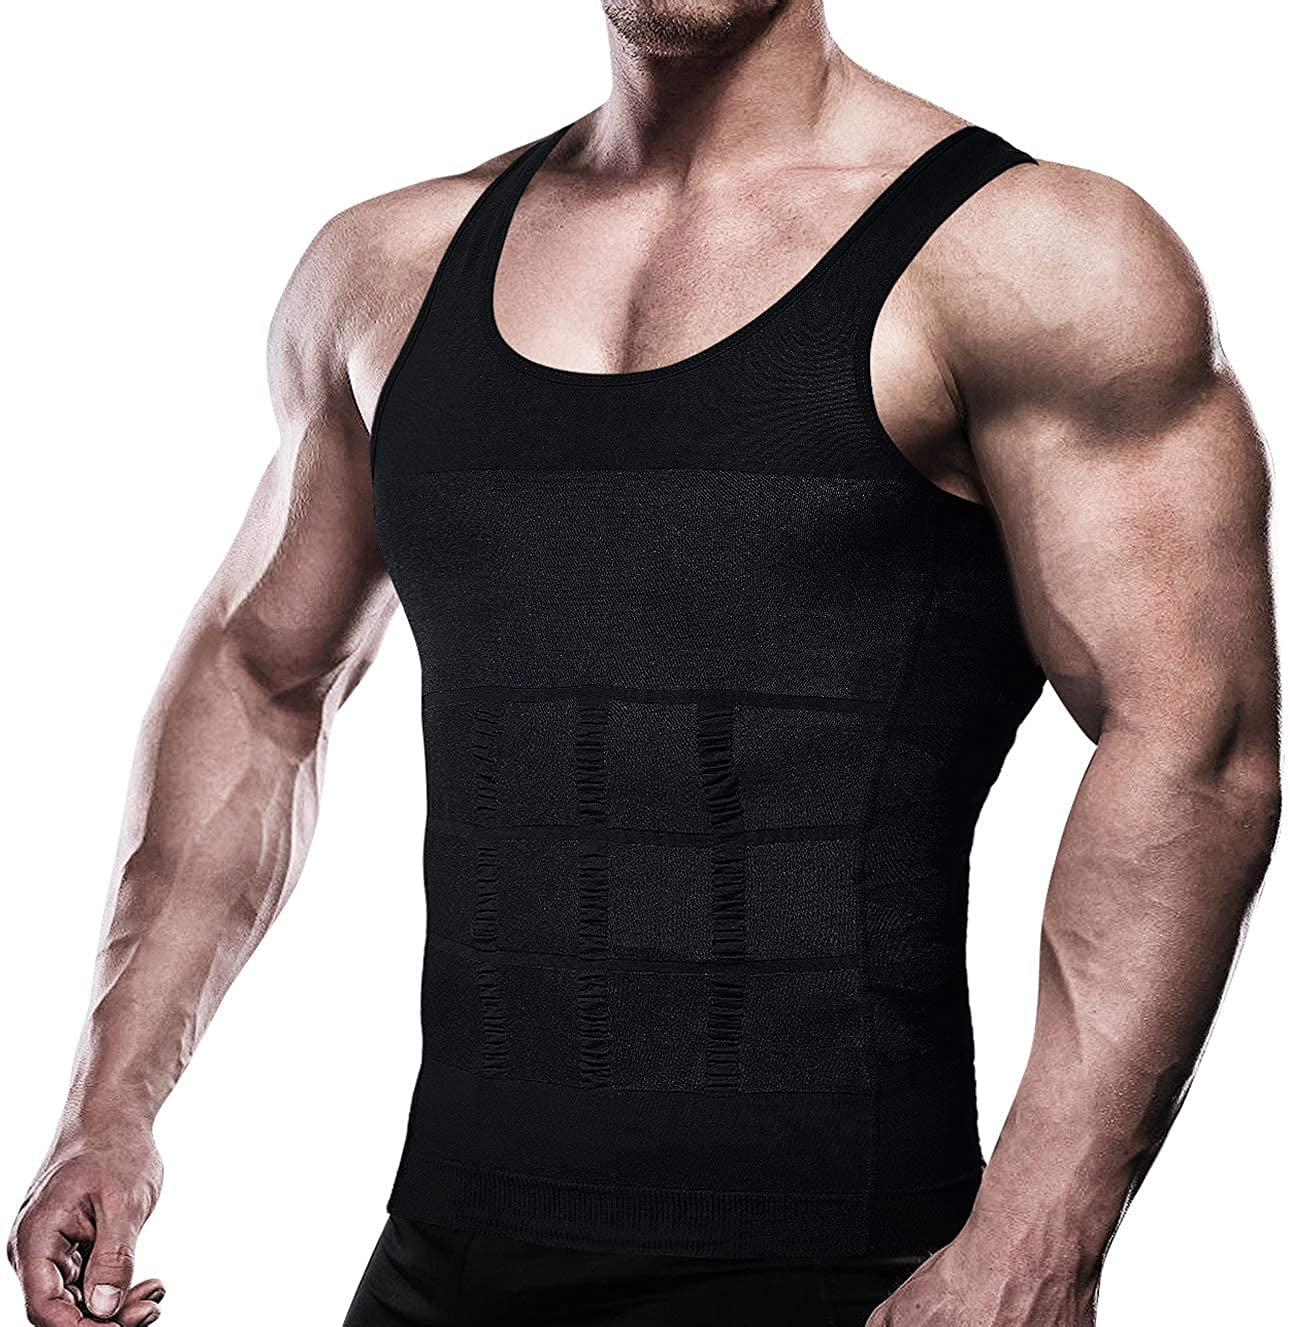 The UltraDurable Body Toning Shirt Compression Body Building Shirt Men Original Quality 